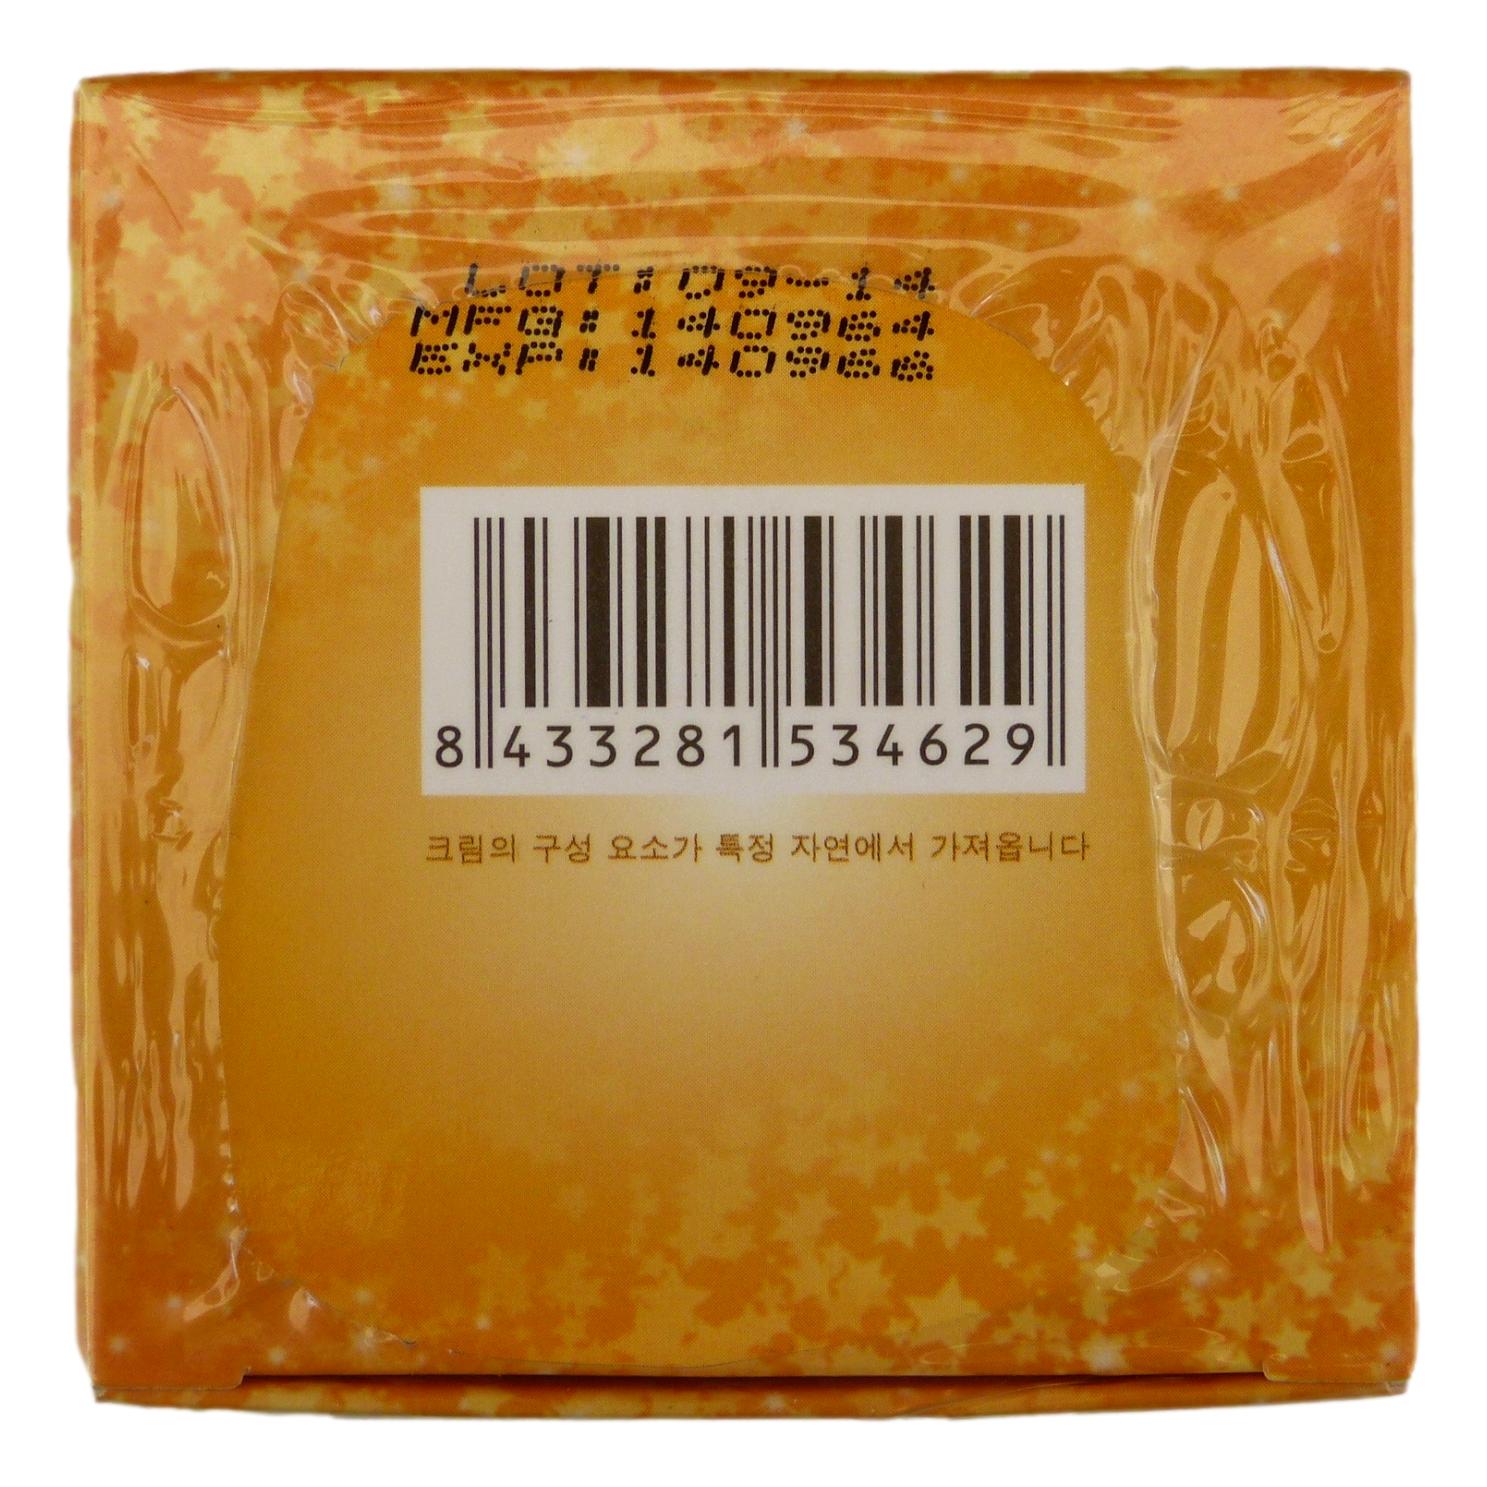 Hiyady Hyaluronic Filler Ultra Lift Whitening Night Cream Pack of 4 - Asian Beauty Supply